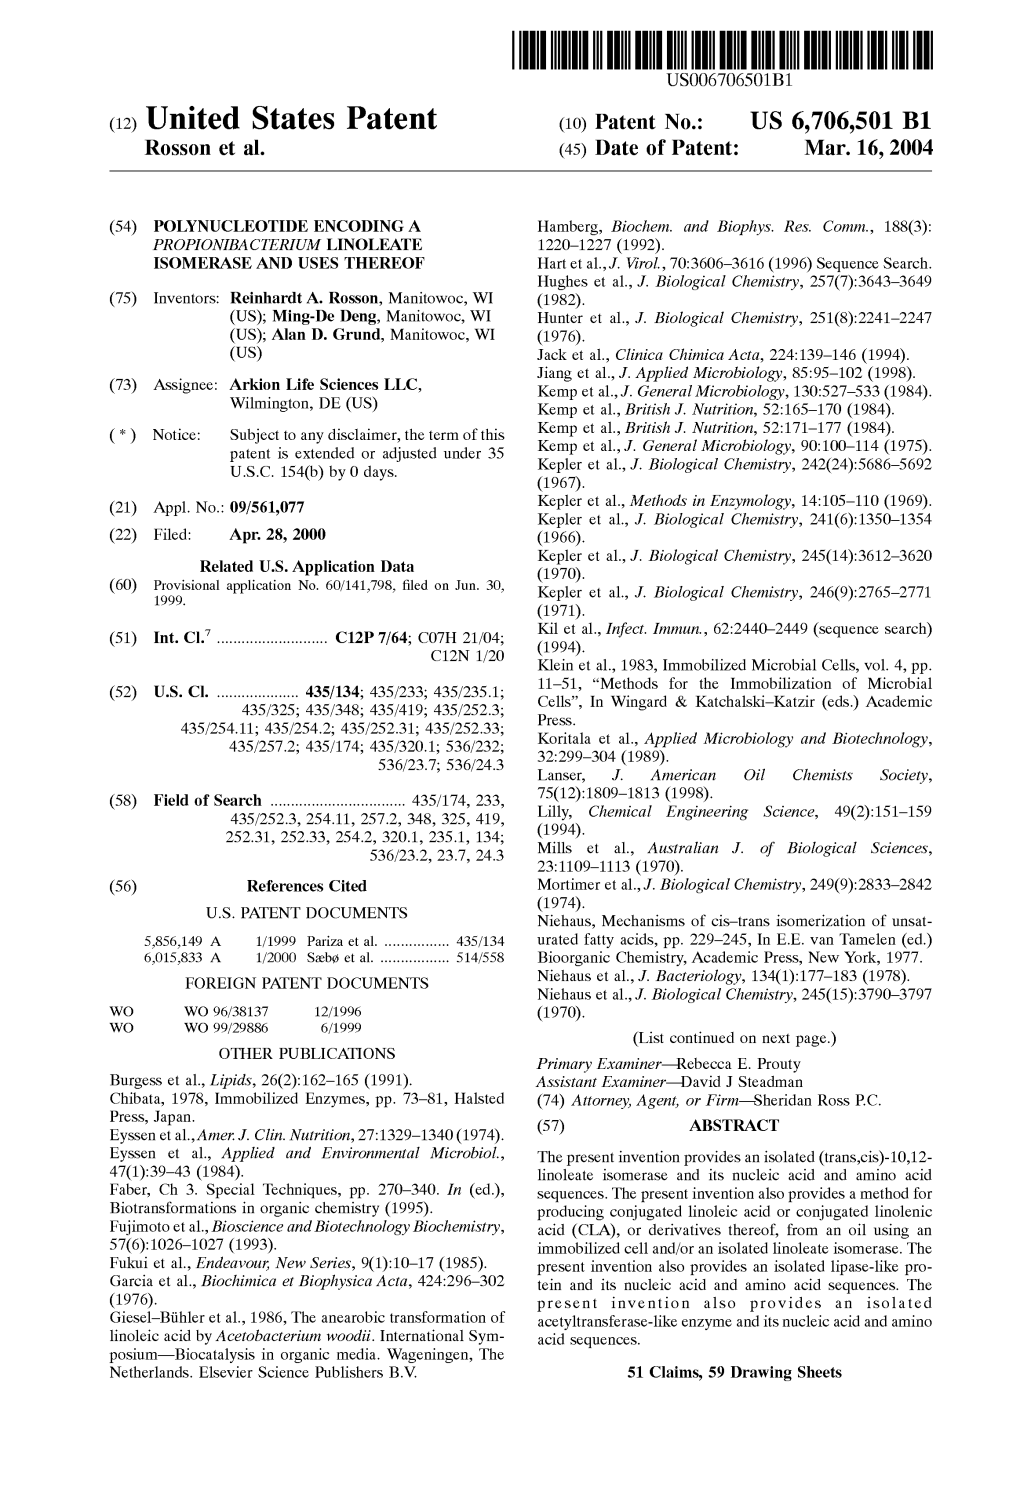 (12) United States Patent (10) Patent No.: US 6,706,501 B1 Ross0n Et Al